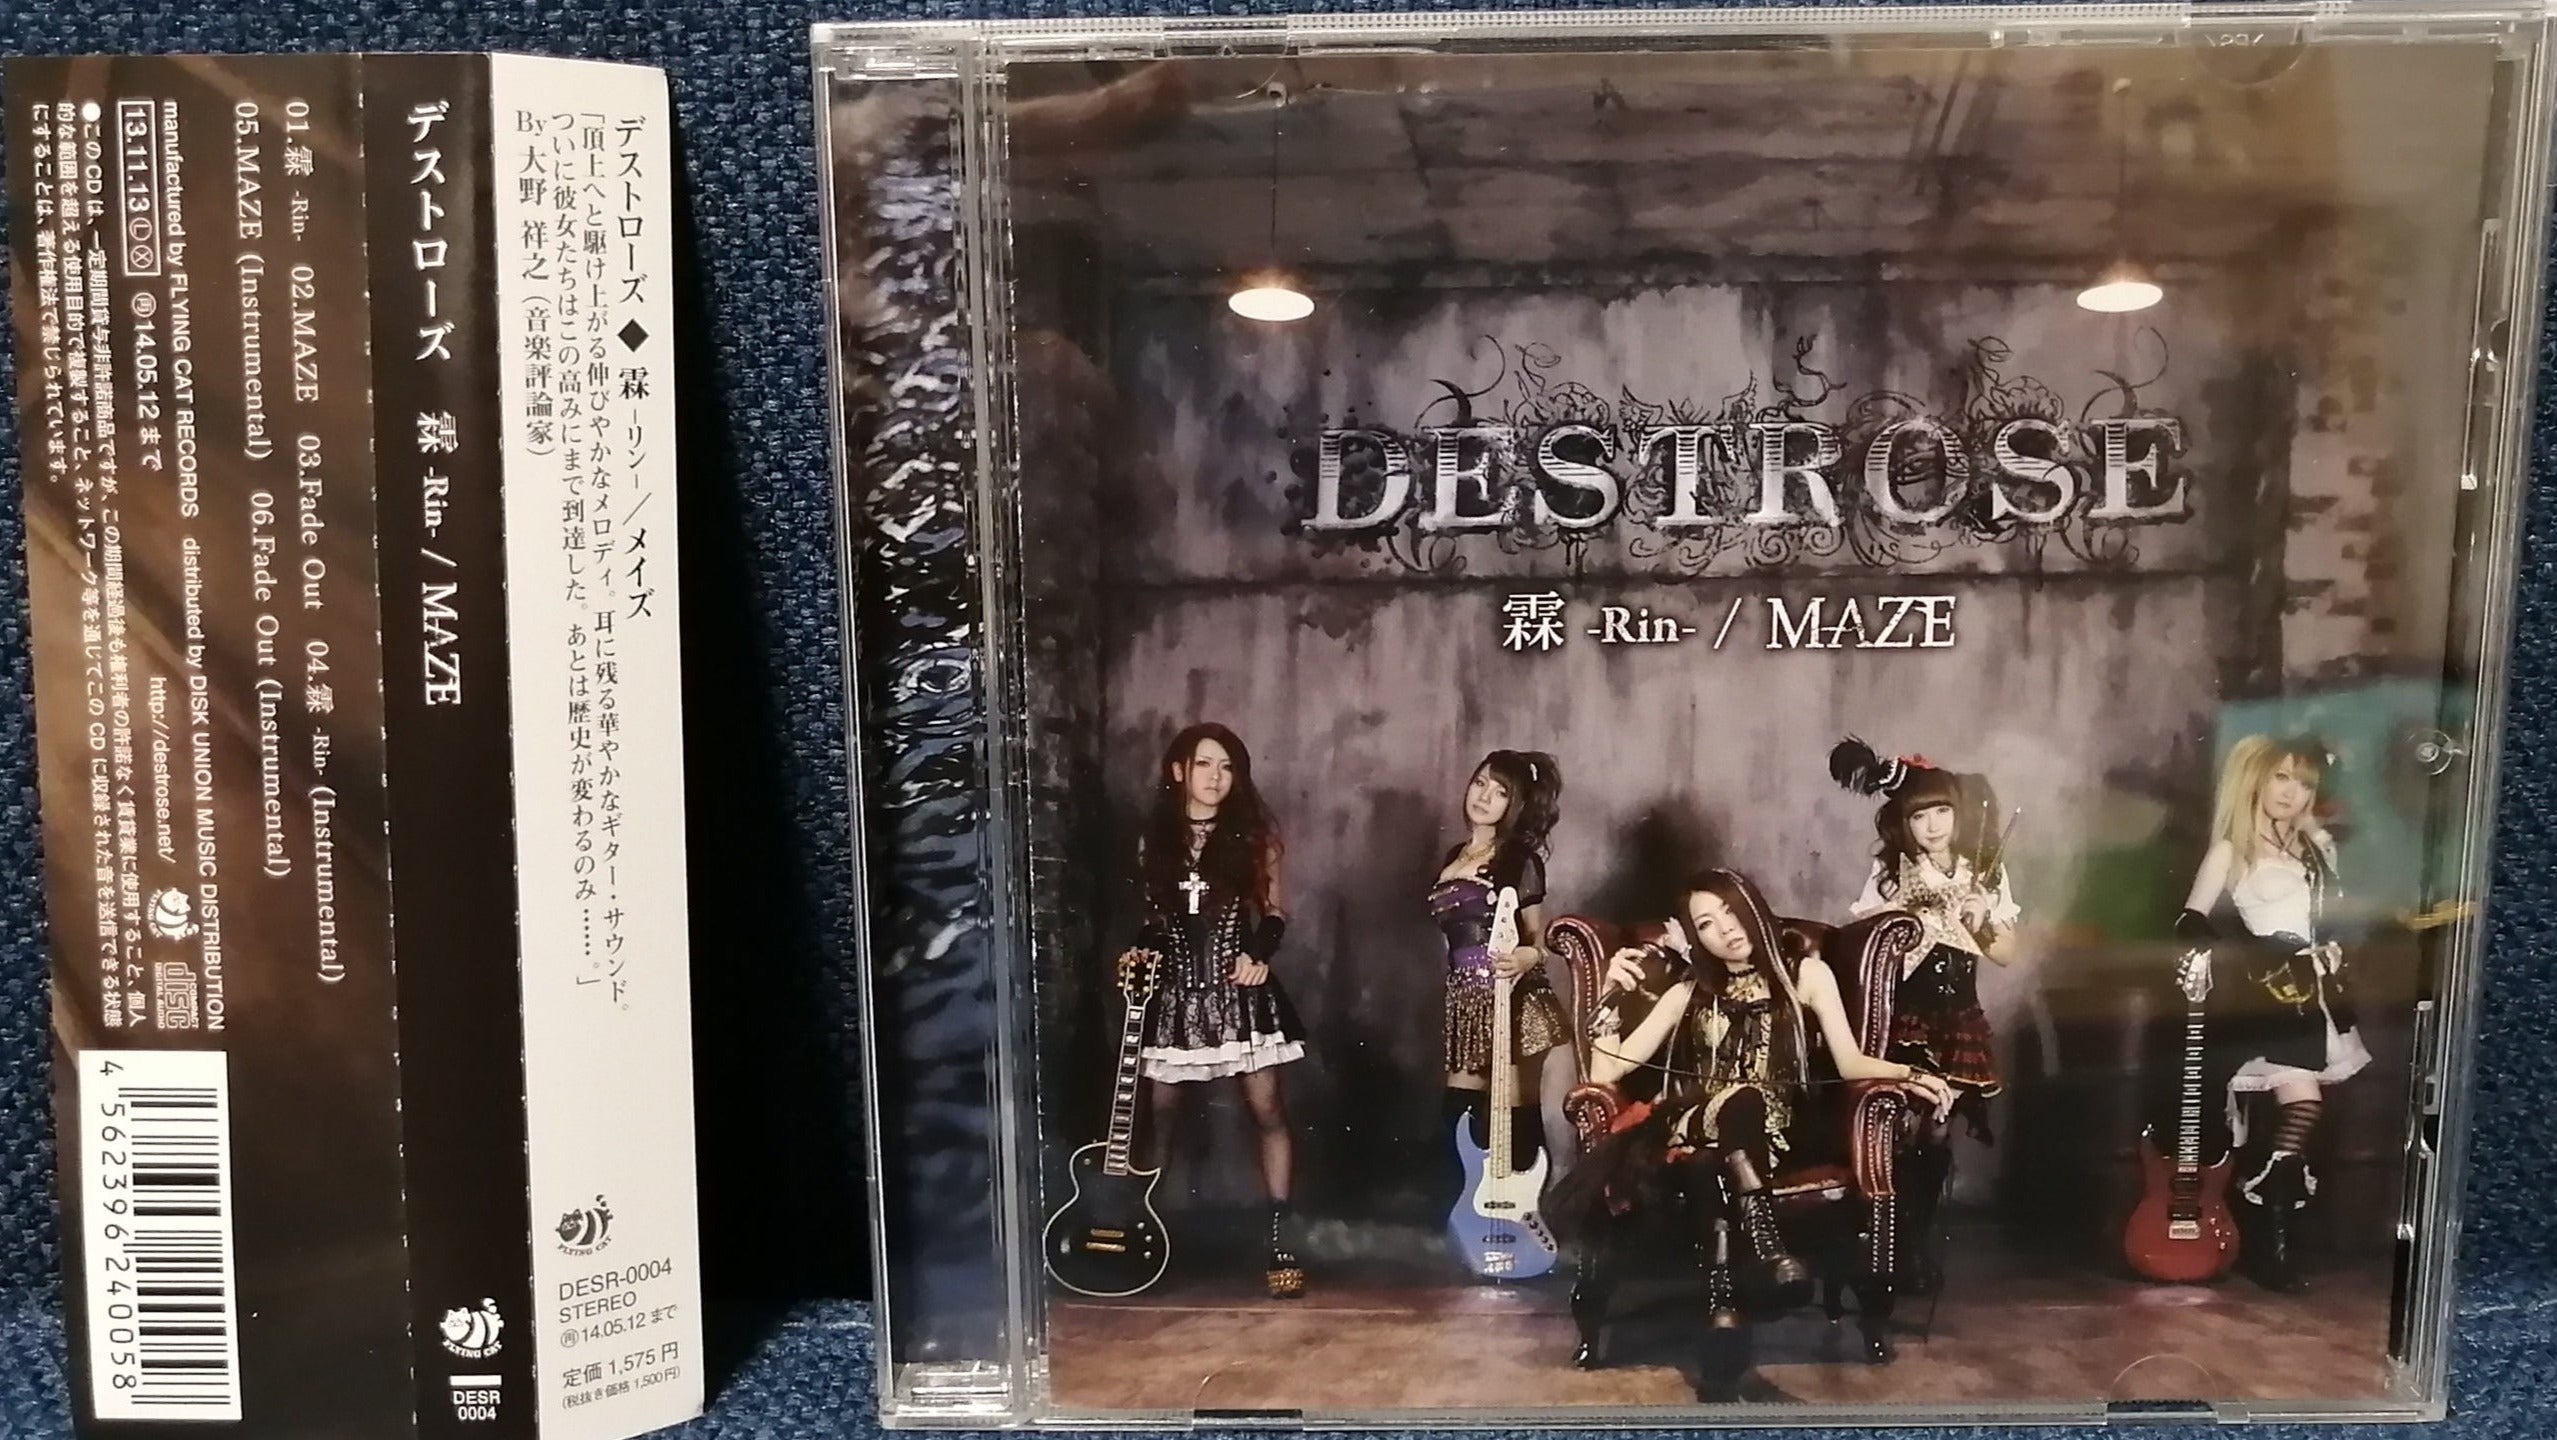 Destrose - Rin / Maze Japan Girls Metal Single CD